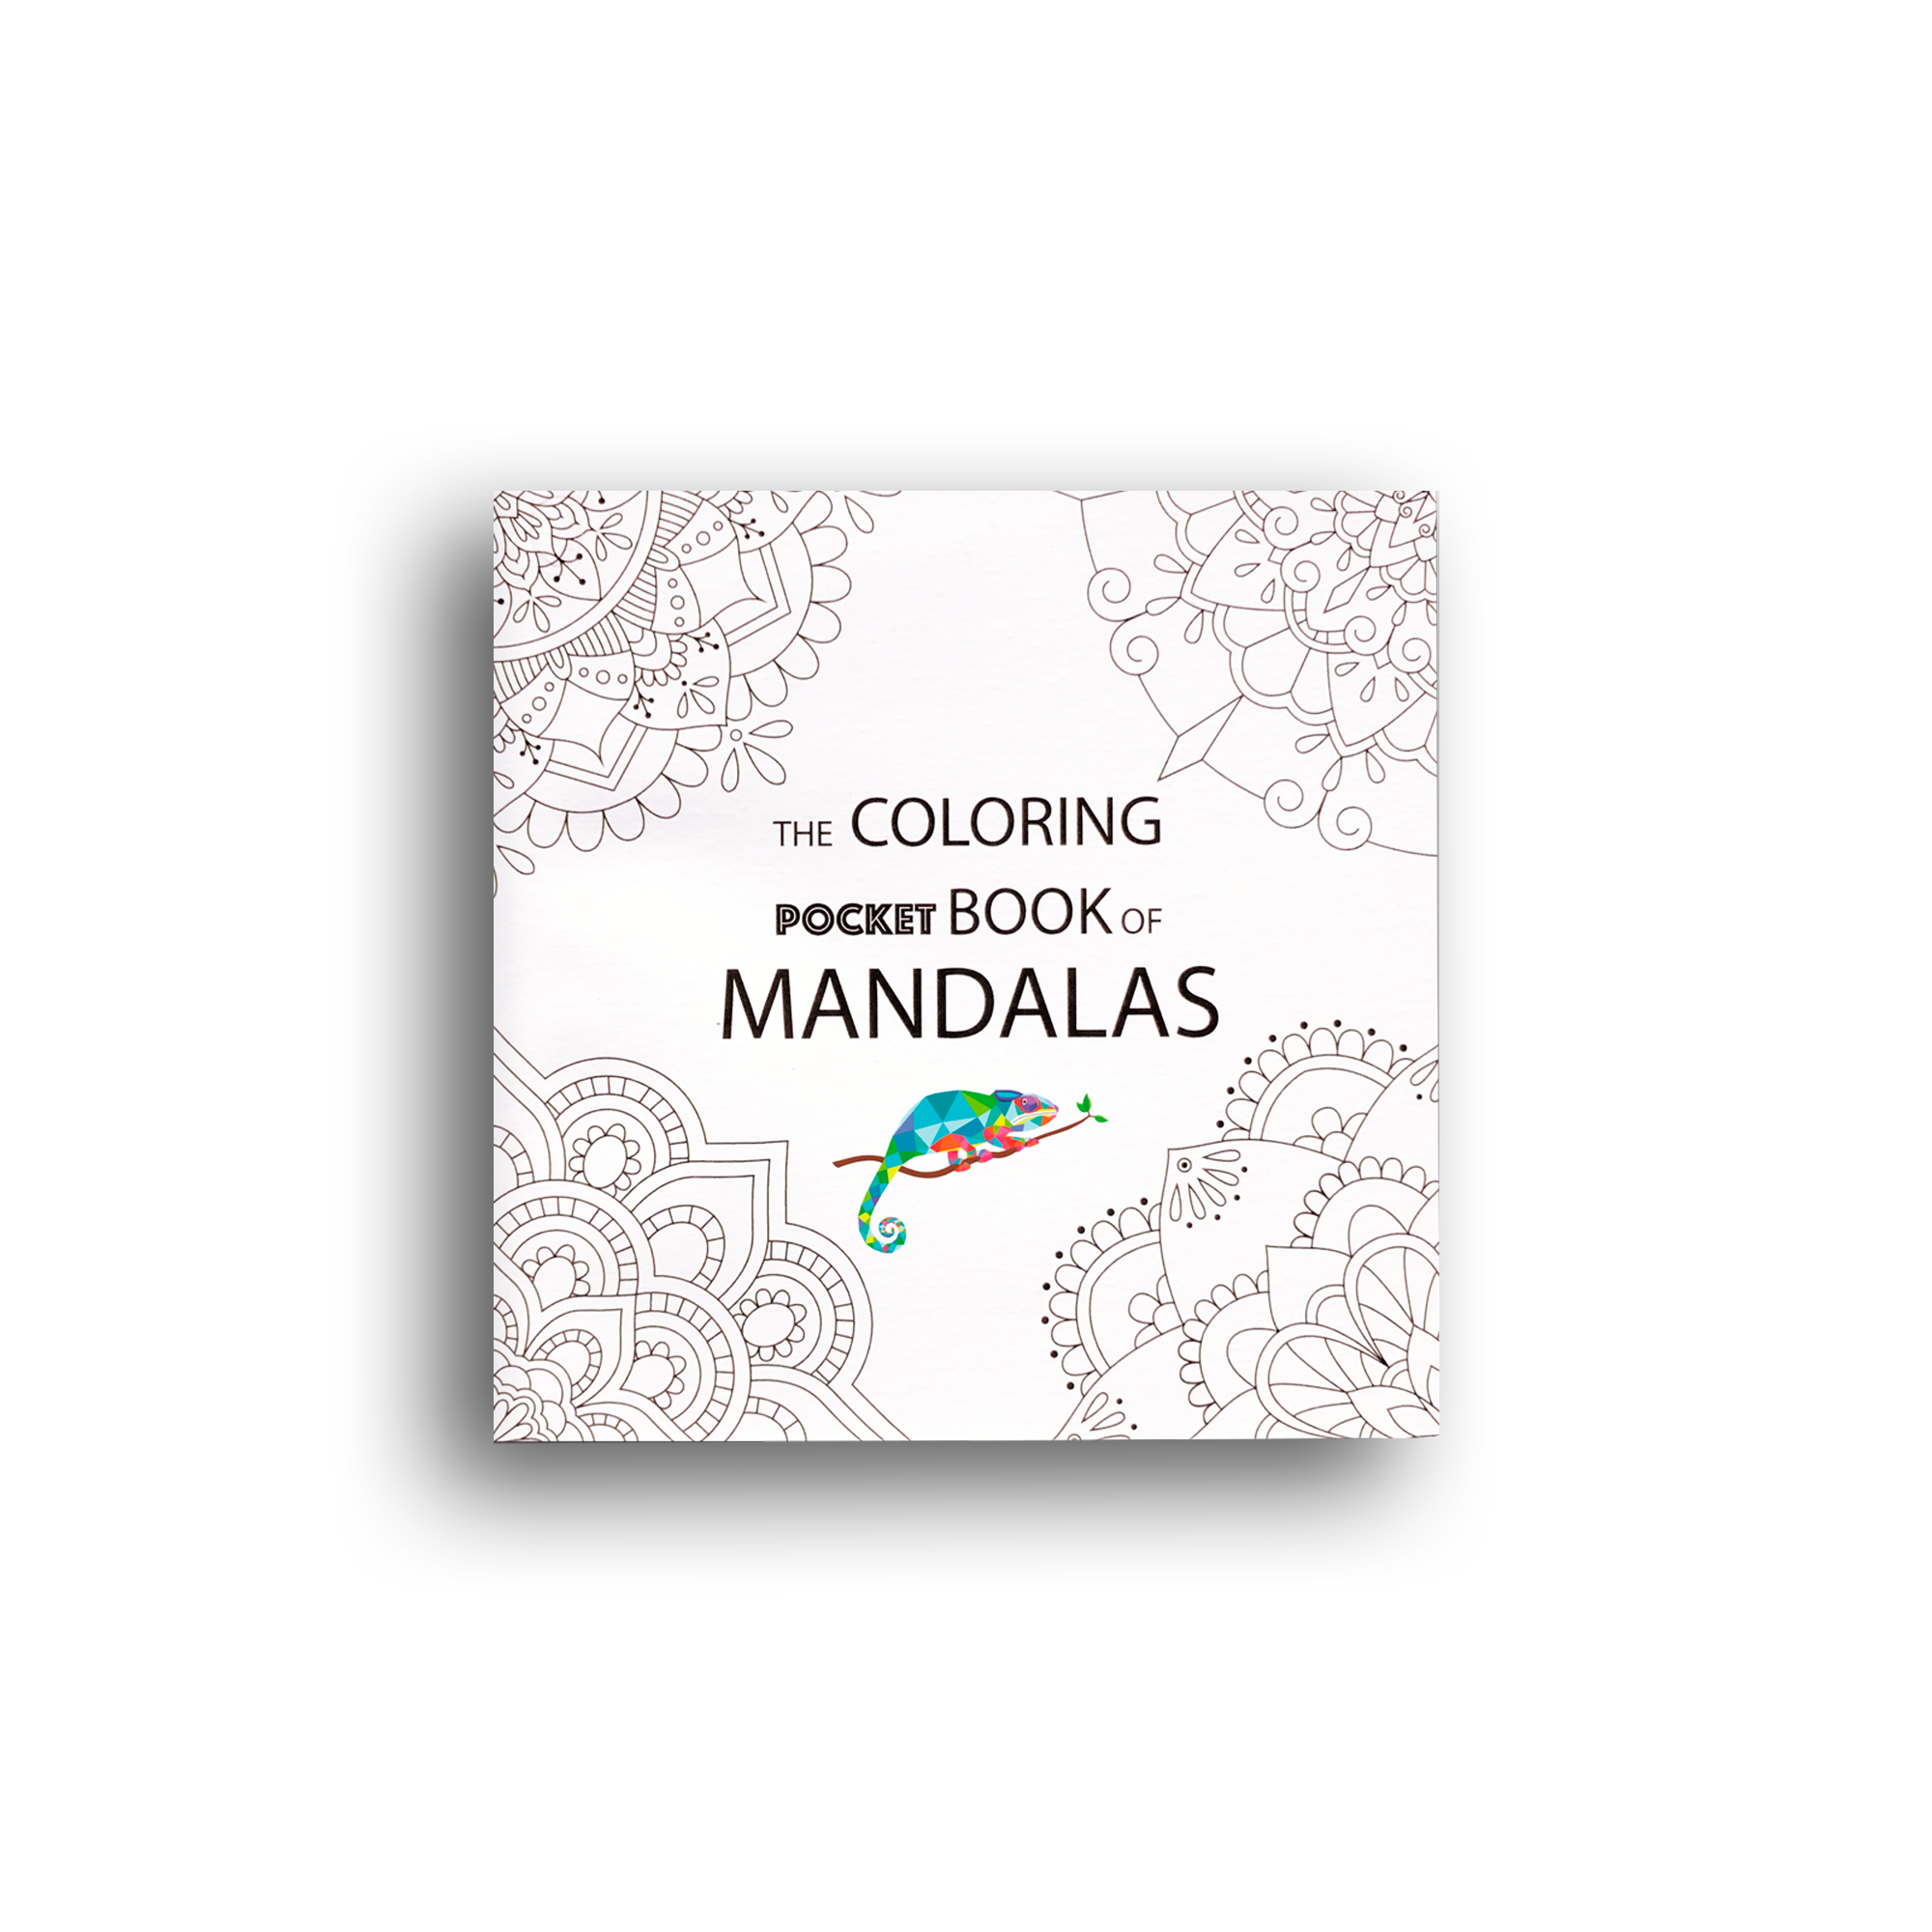 The Coloring Pocket Book of Mandalas